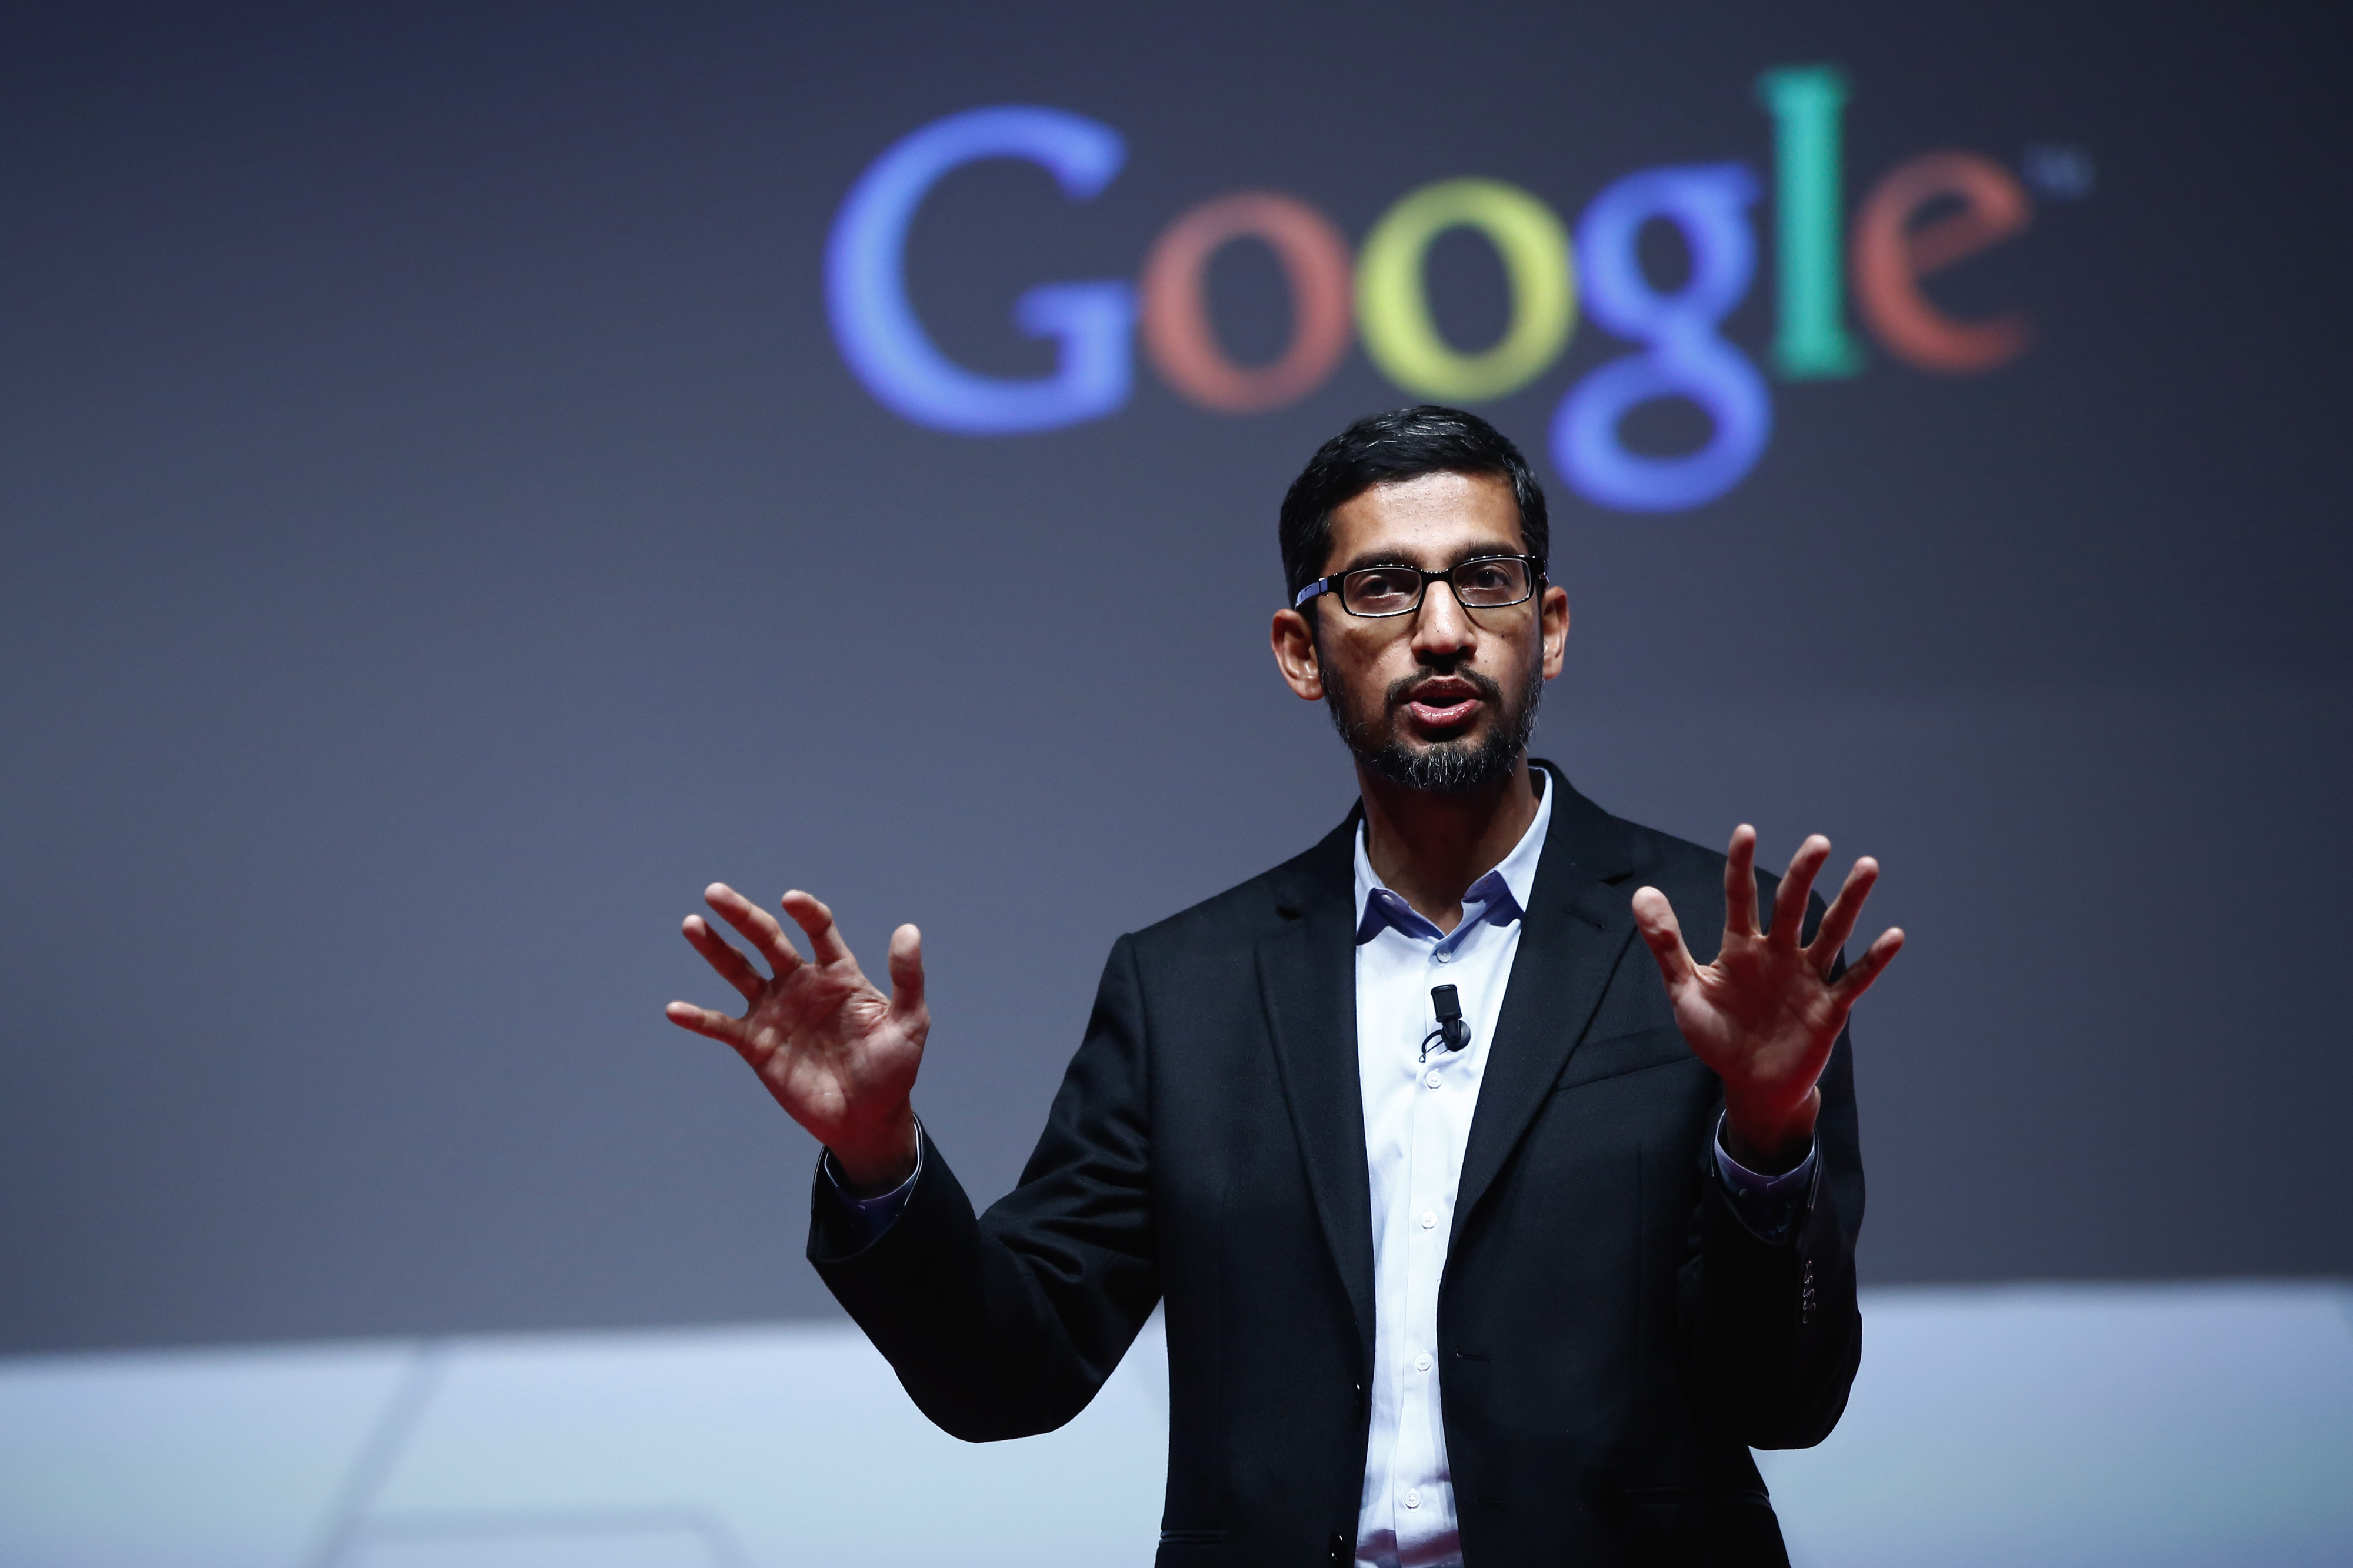 Google will never sell data to 3rd parties: Sundar Pichai, Google CEO